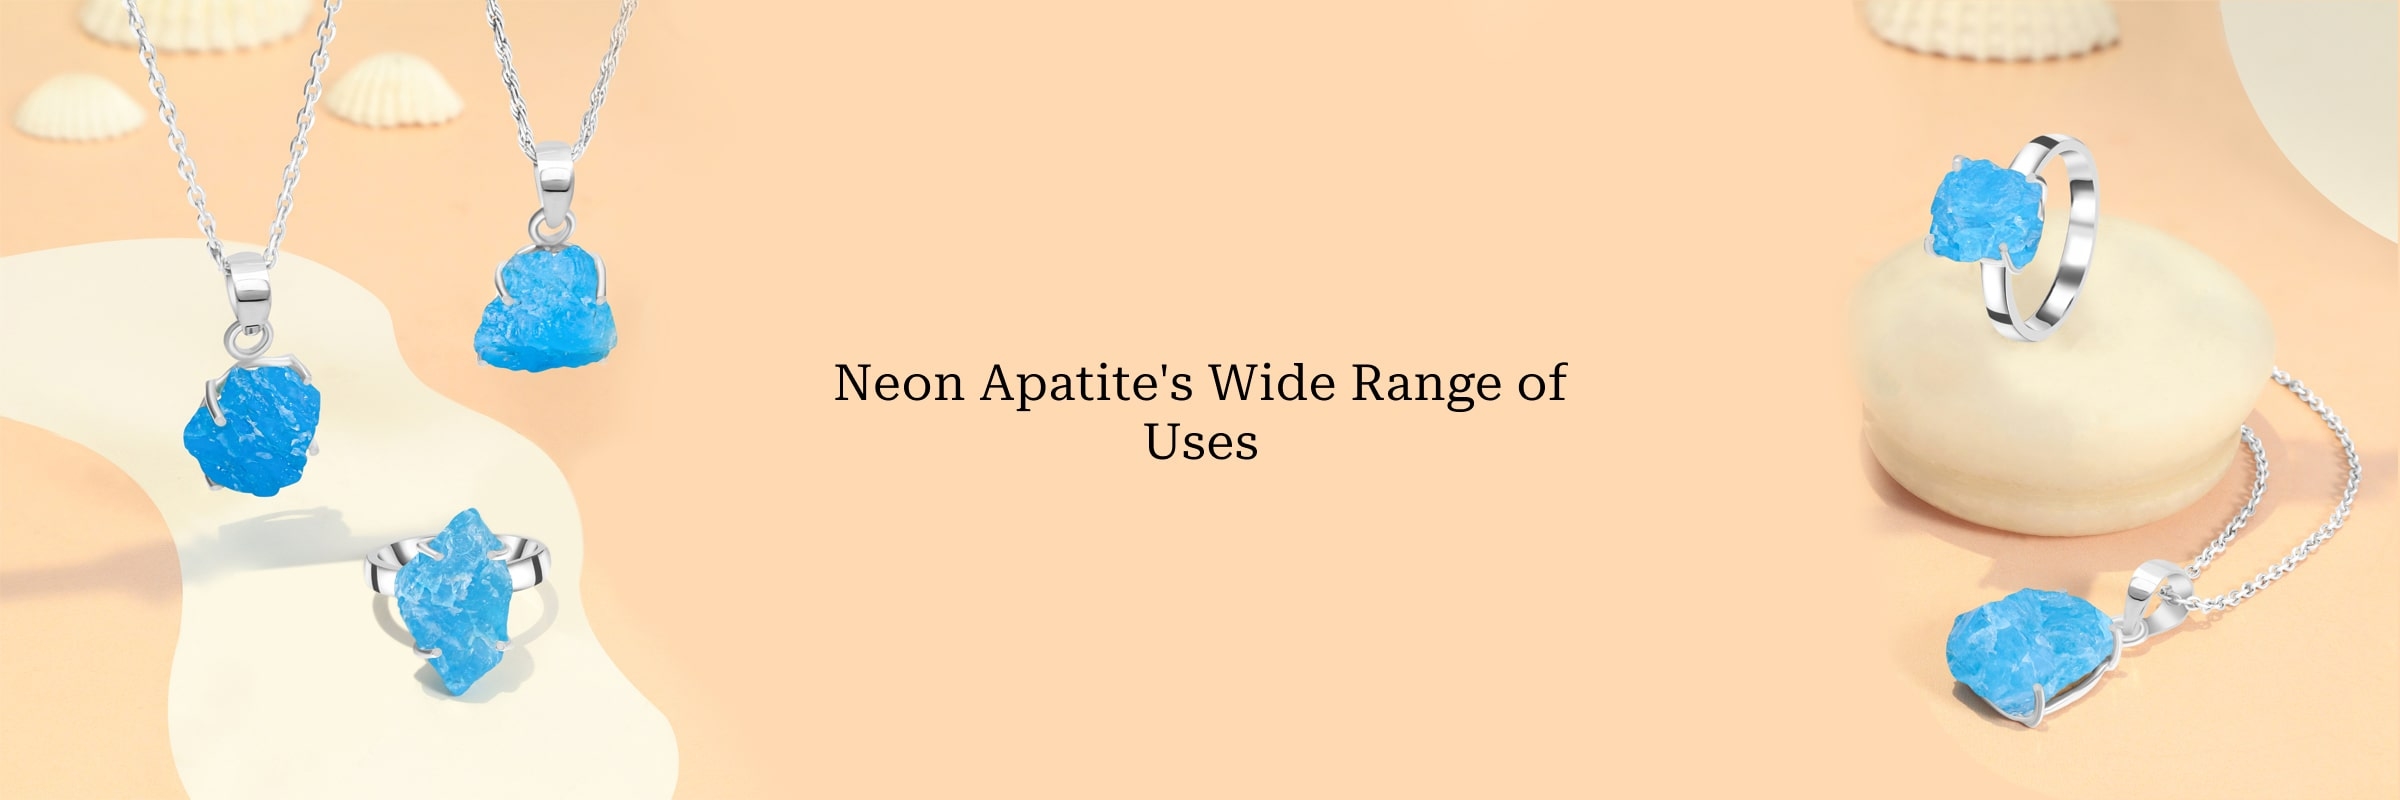 Uses of Neon Apatite